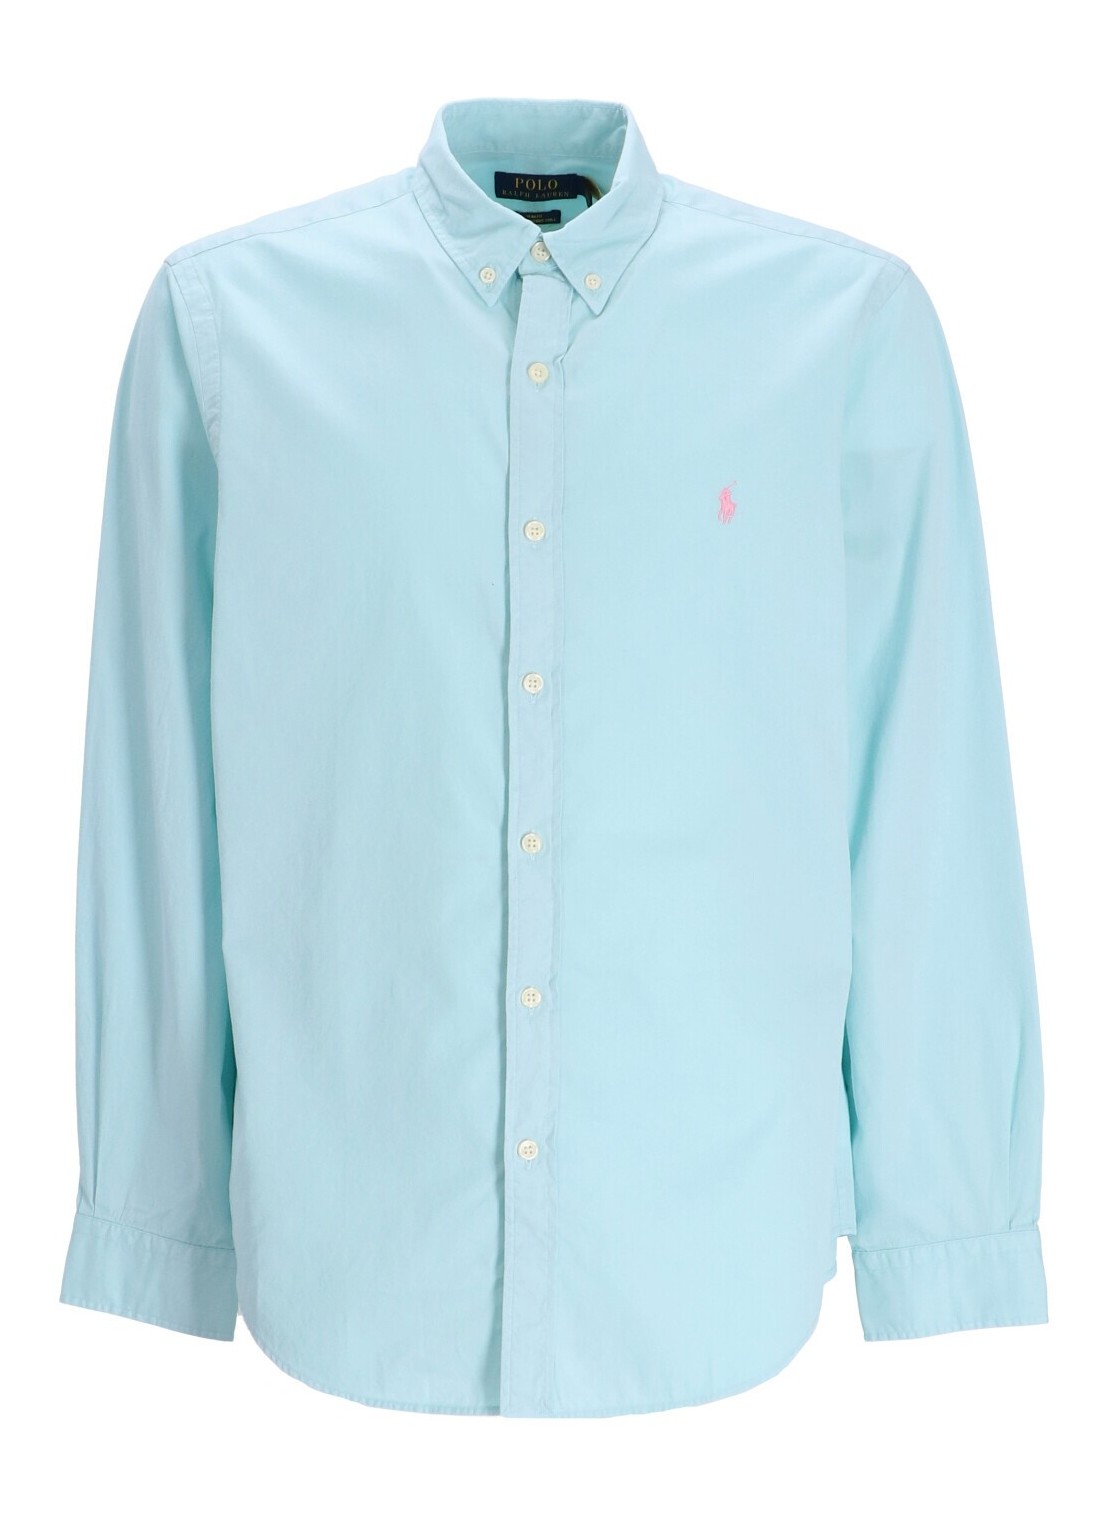 Camiseria polo ralph lauren shirt man slbdppcs-long sleeve-sport shirt 710906936005 island aqua tall